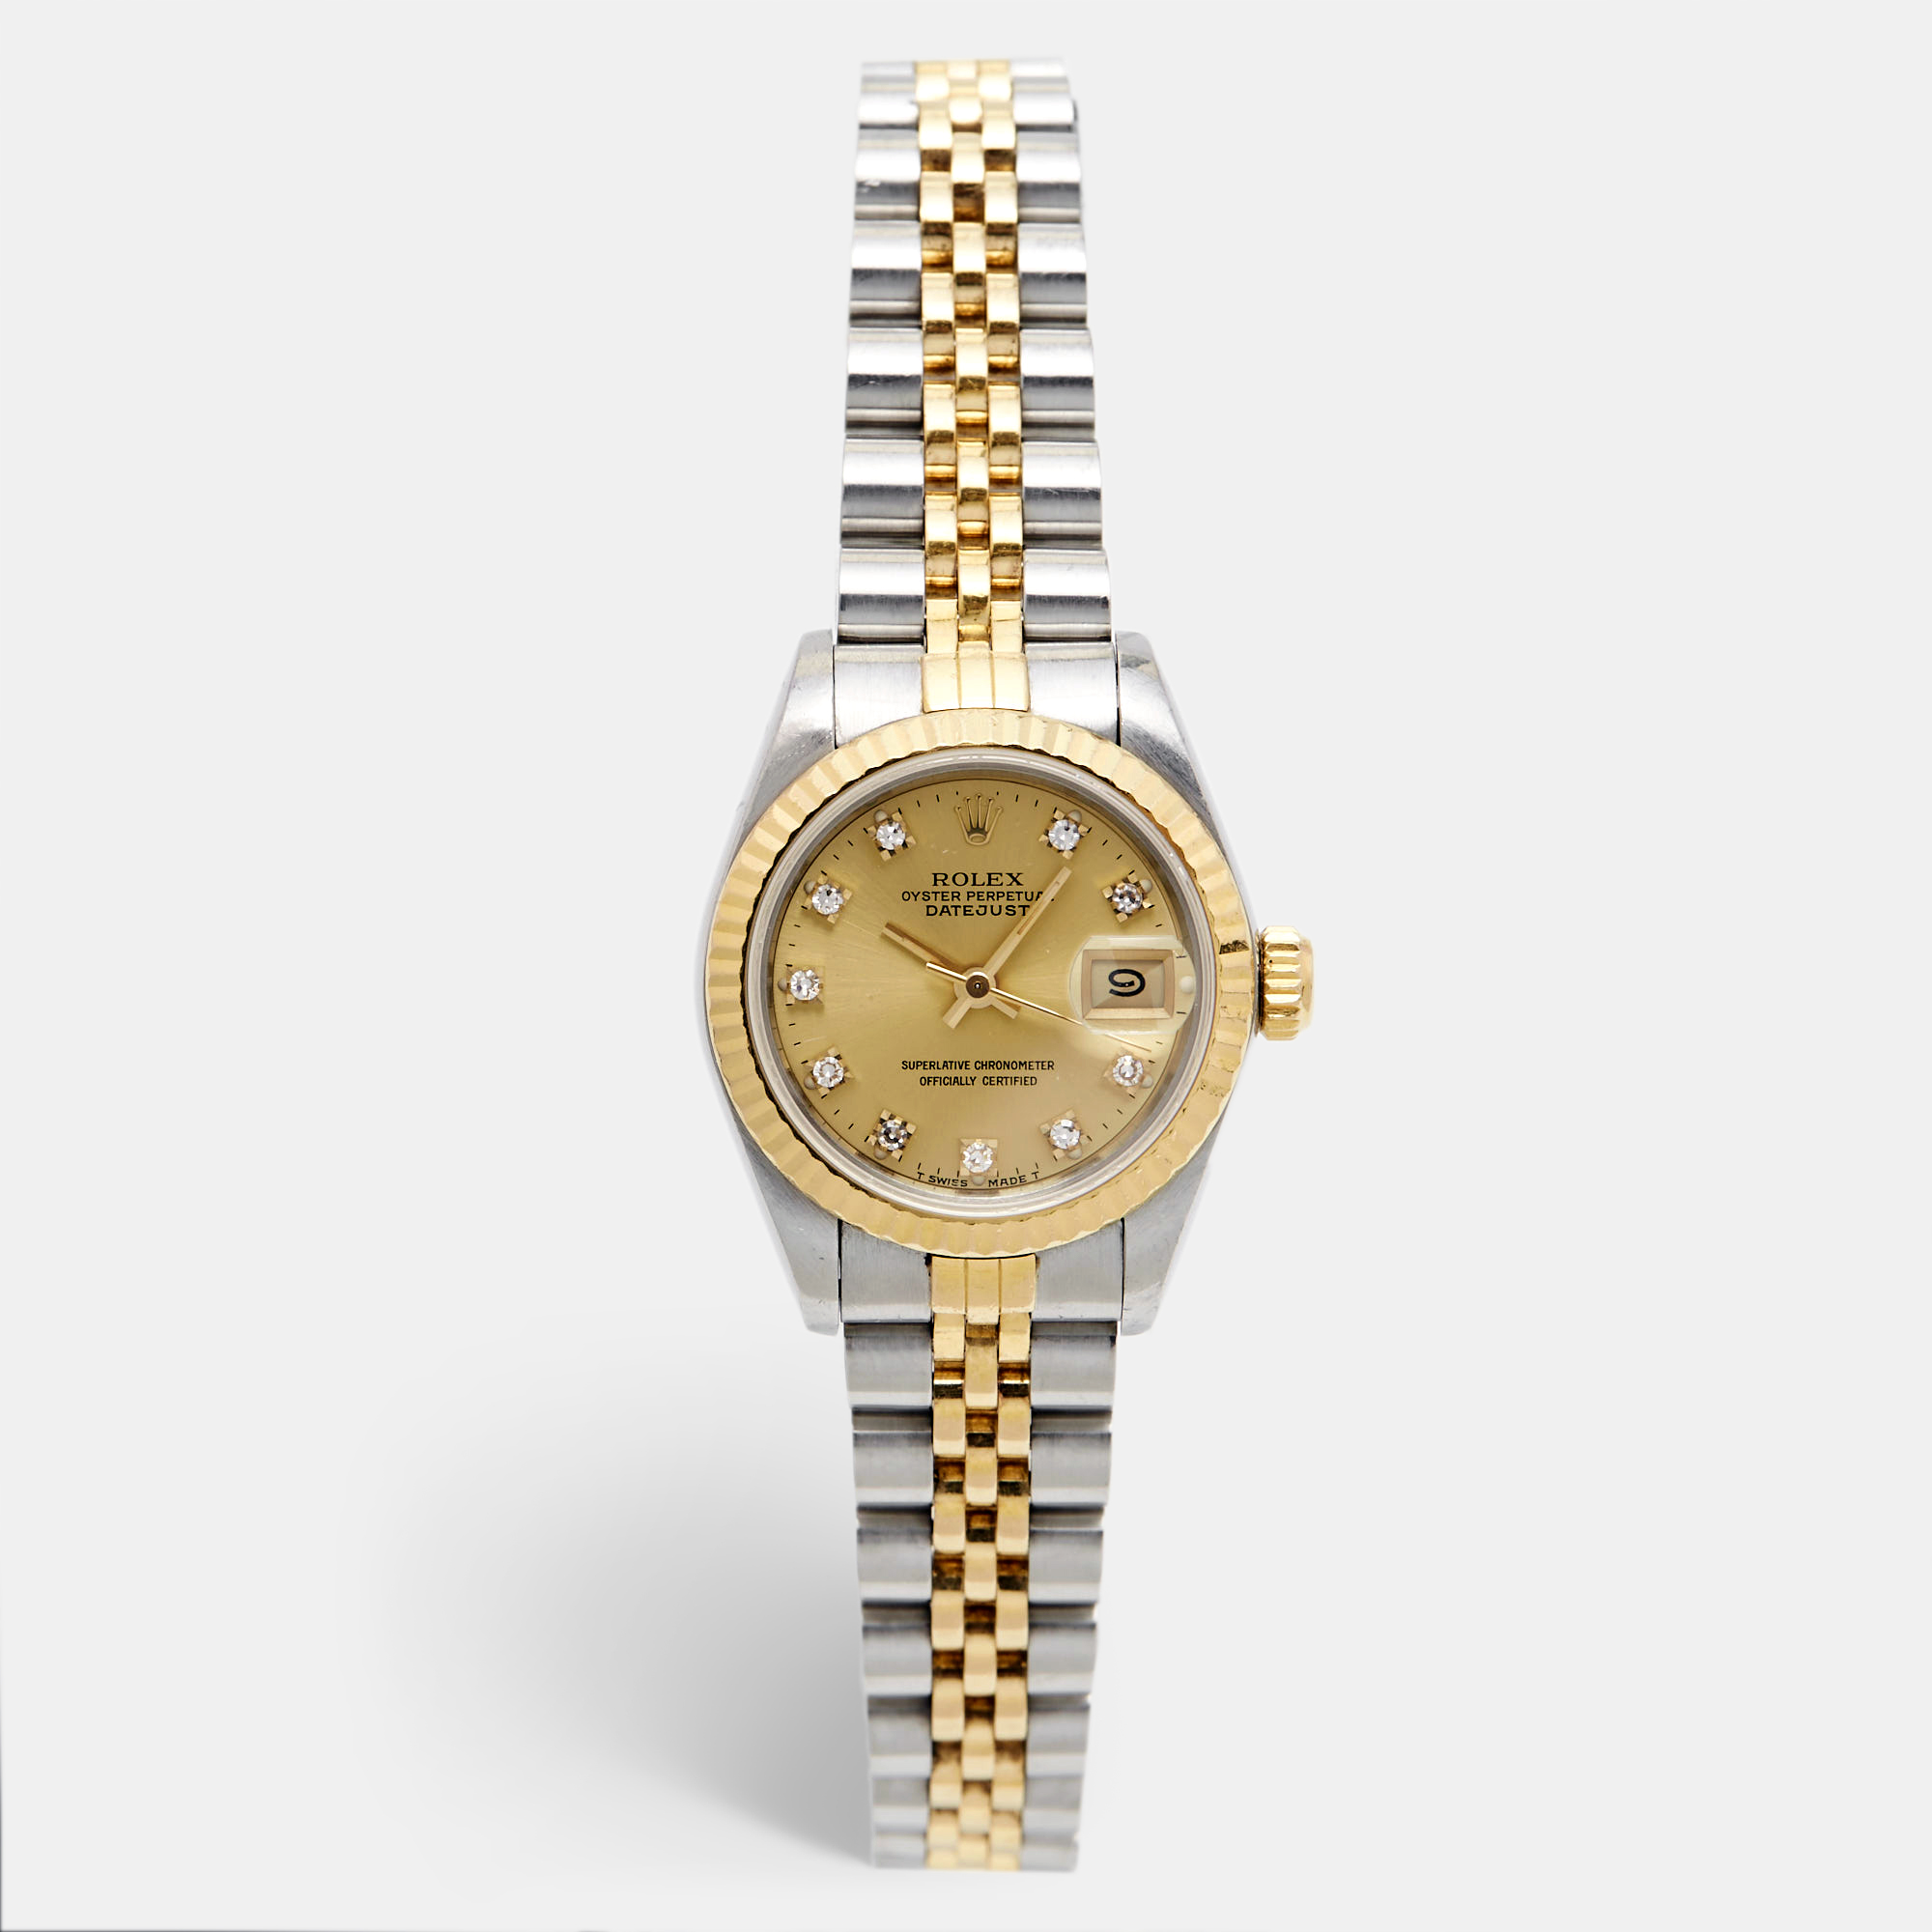 Rolex champagne diamonds 18k yellow gold stainless steel datejust 69173 women's wristwatch 26 mm